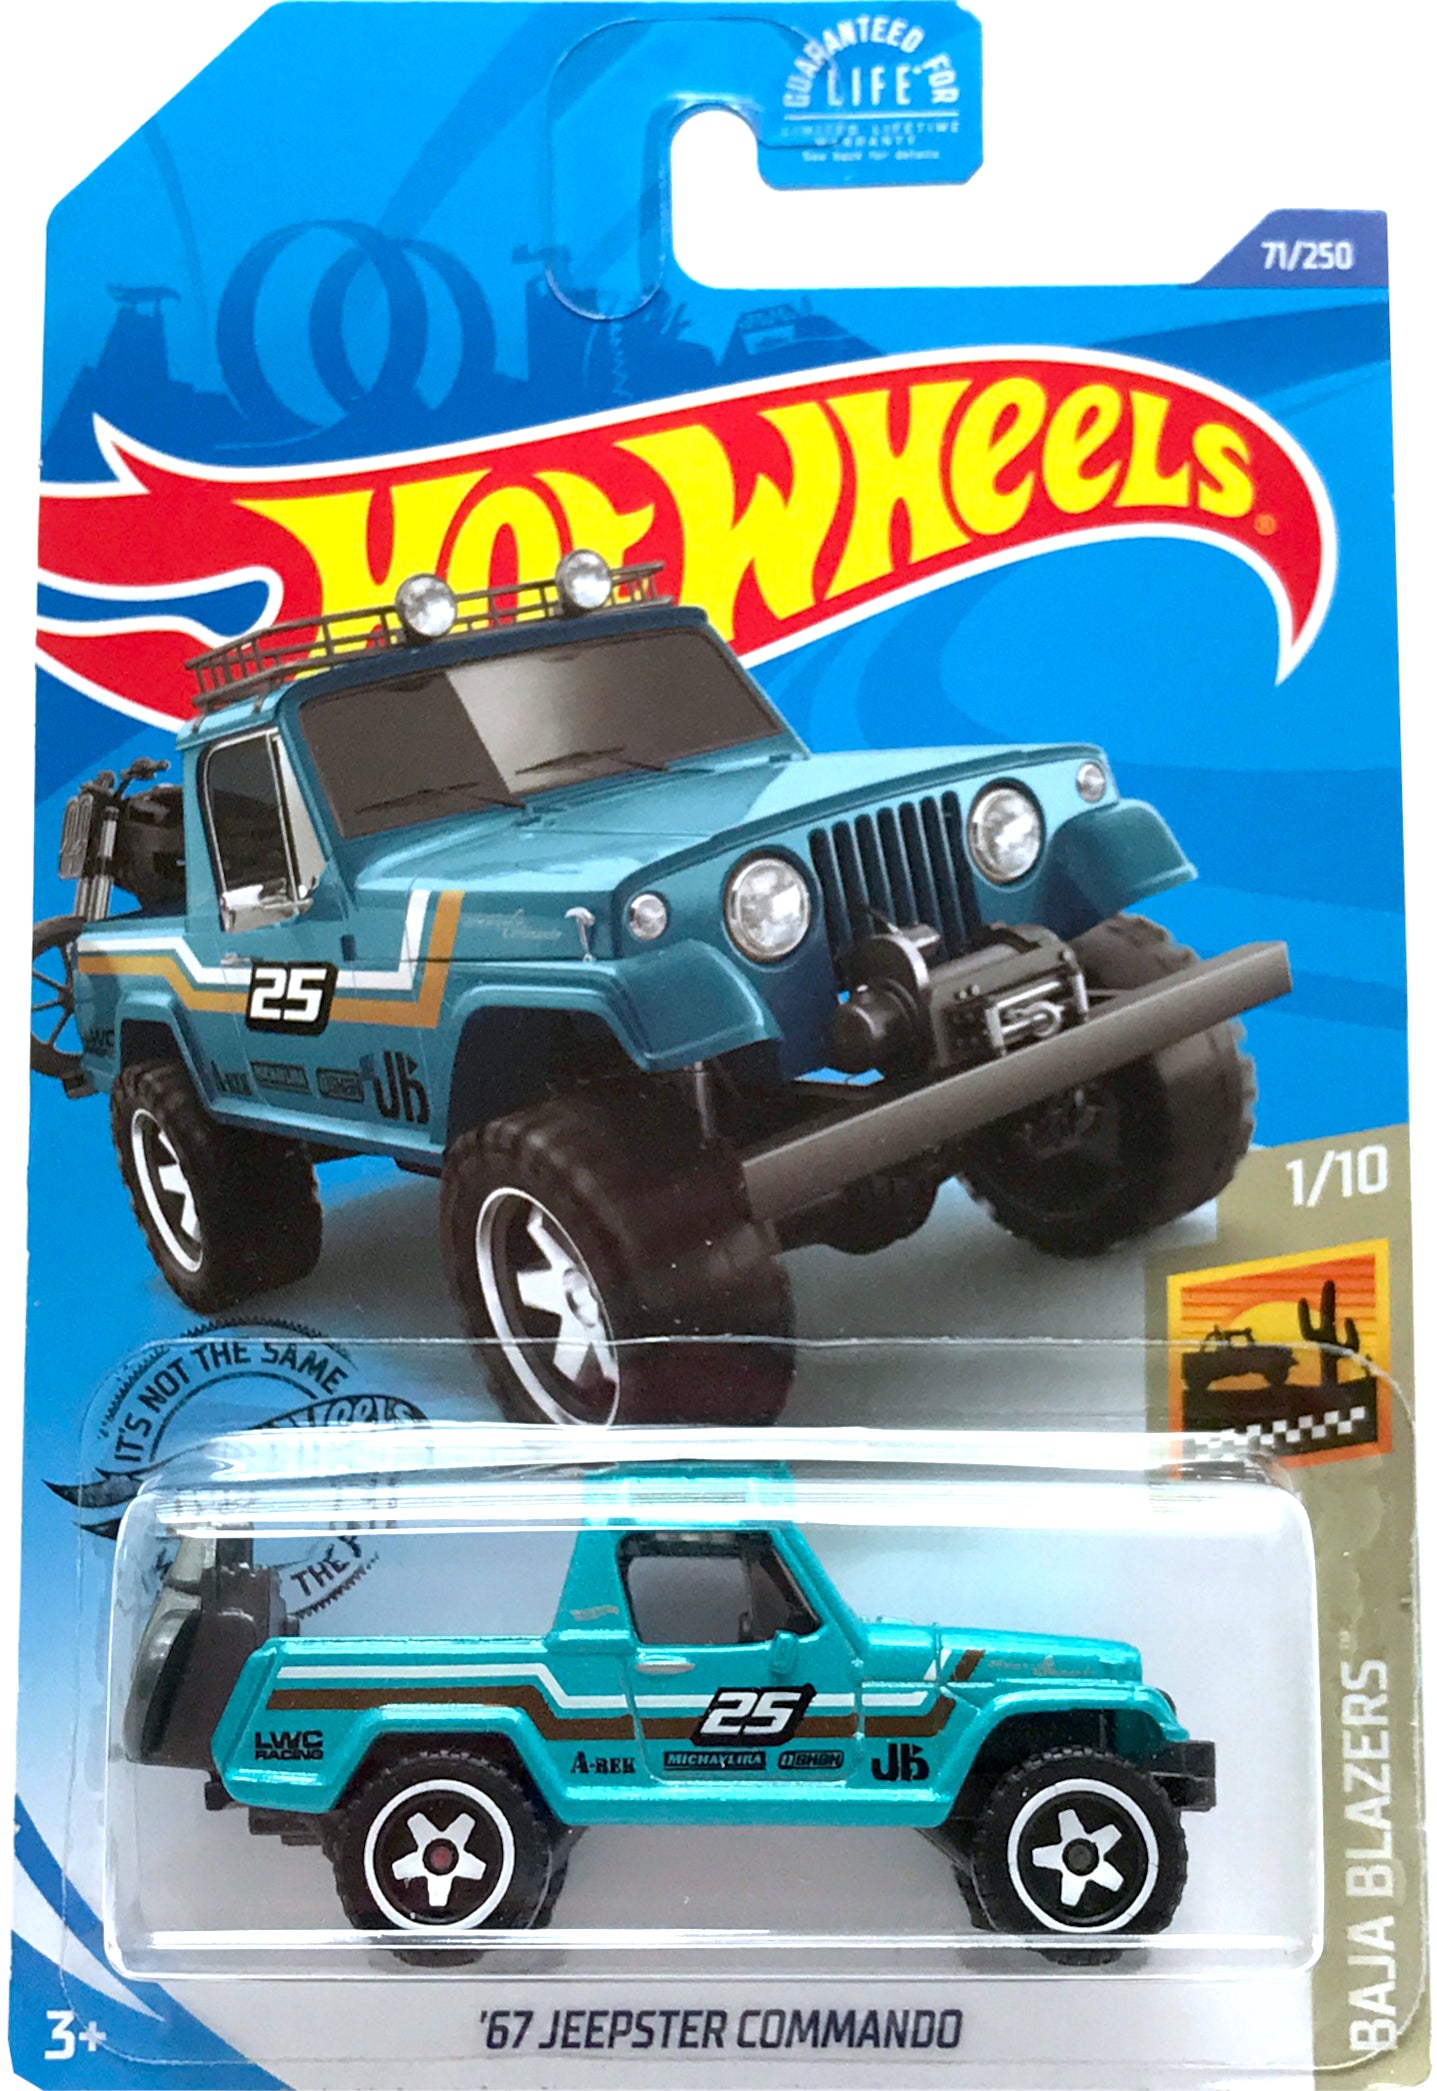 2020 Hot Wheels Mainline #071 - '67 Jeepster Commando (Blue) GHB84